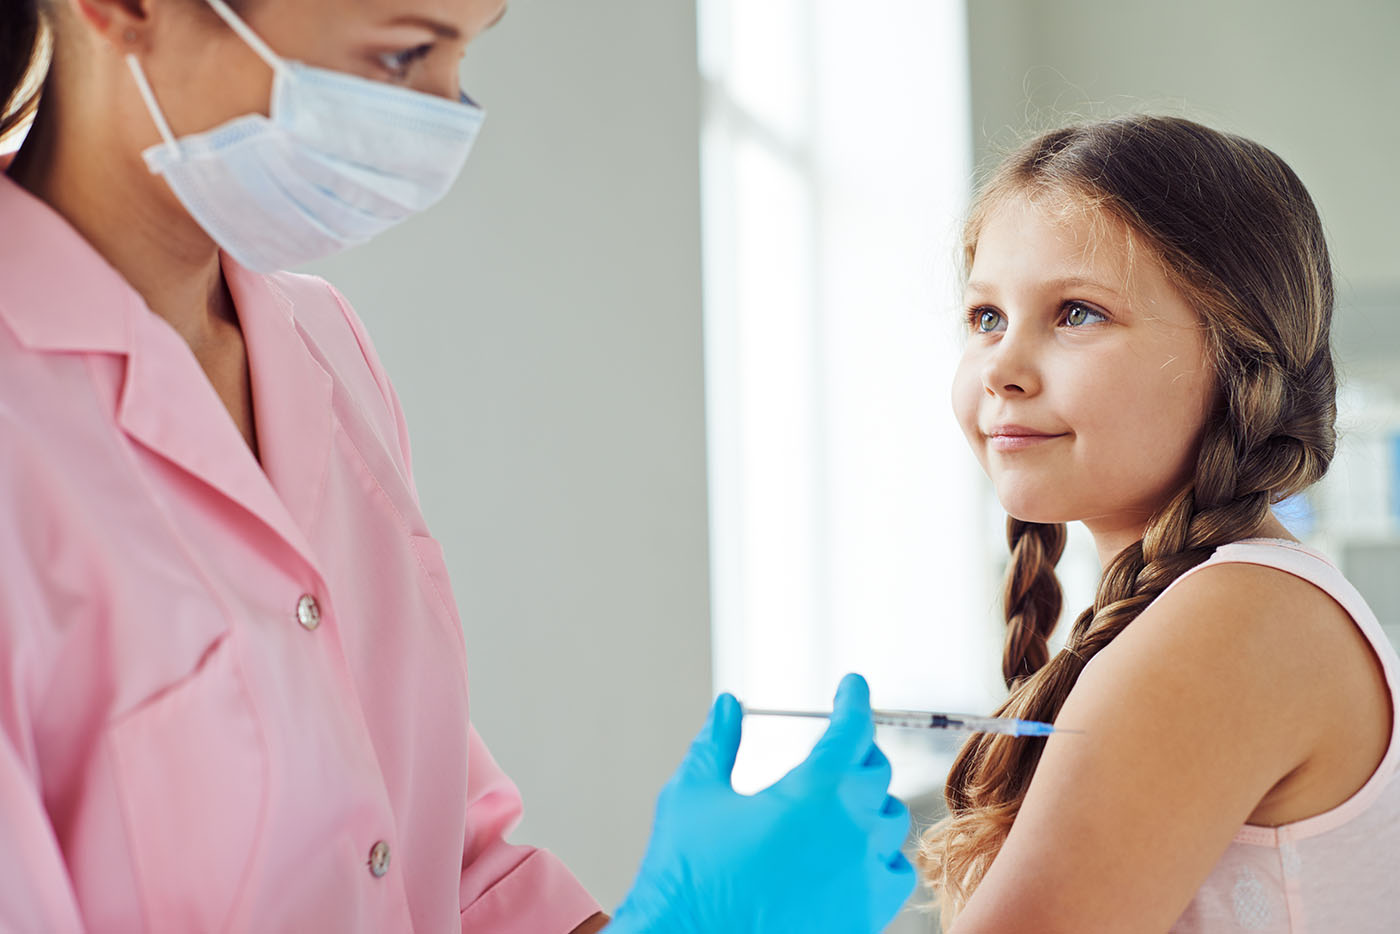 Getting flu vaccine for children.